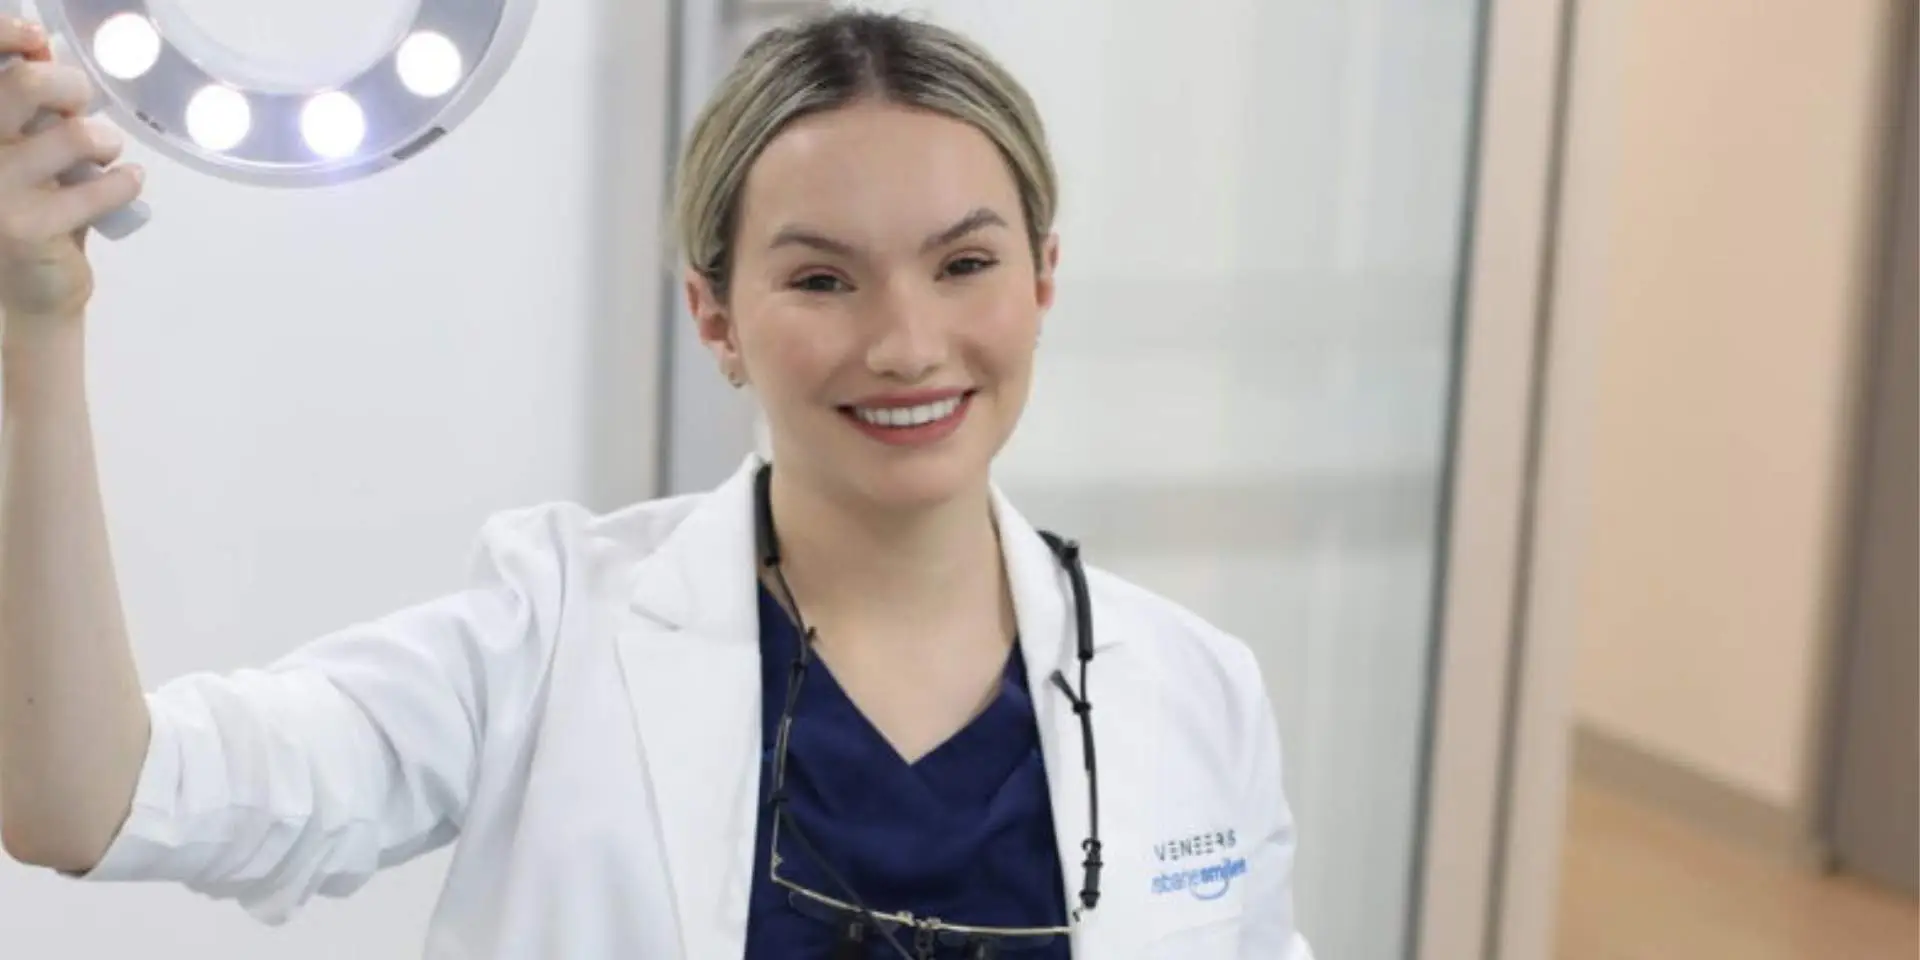 Blog brisbane smiles the science behind smiling female dentist